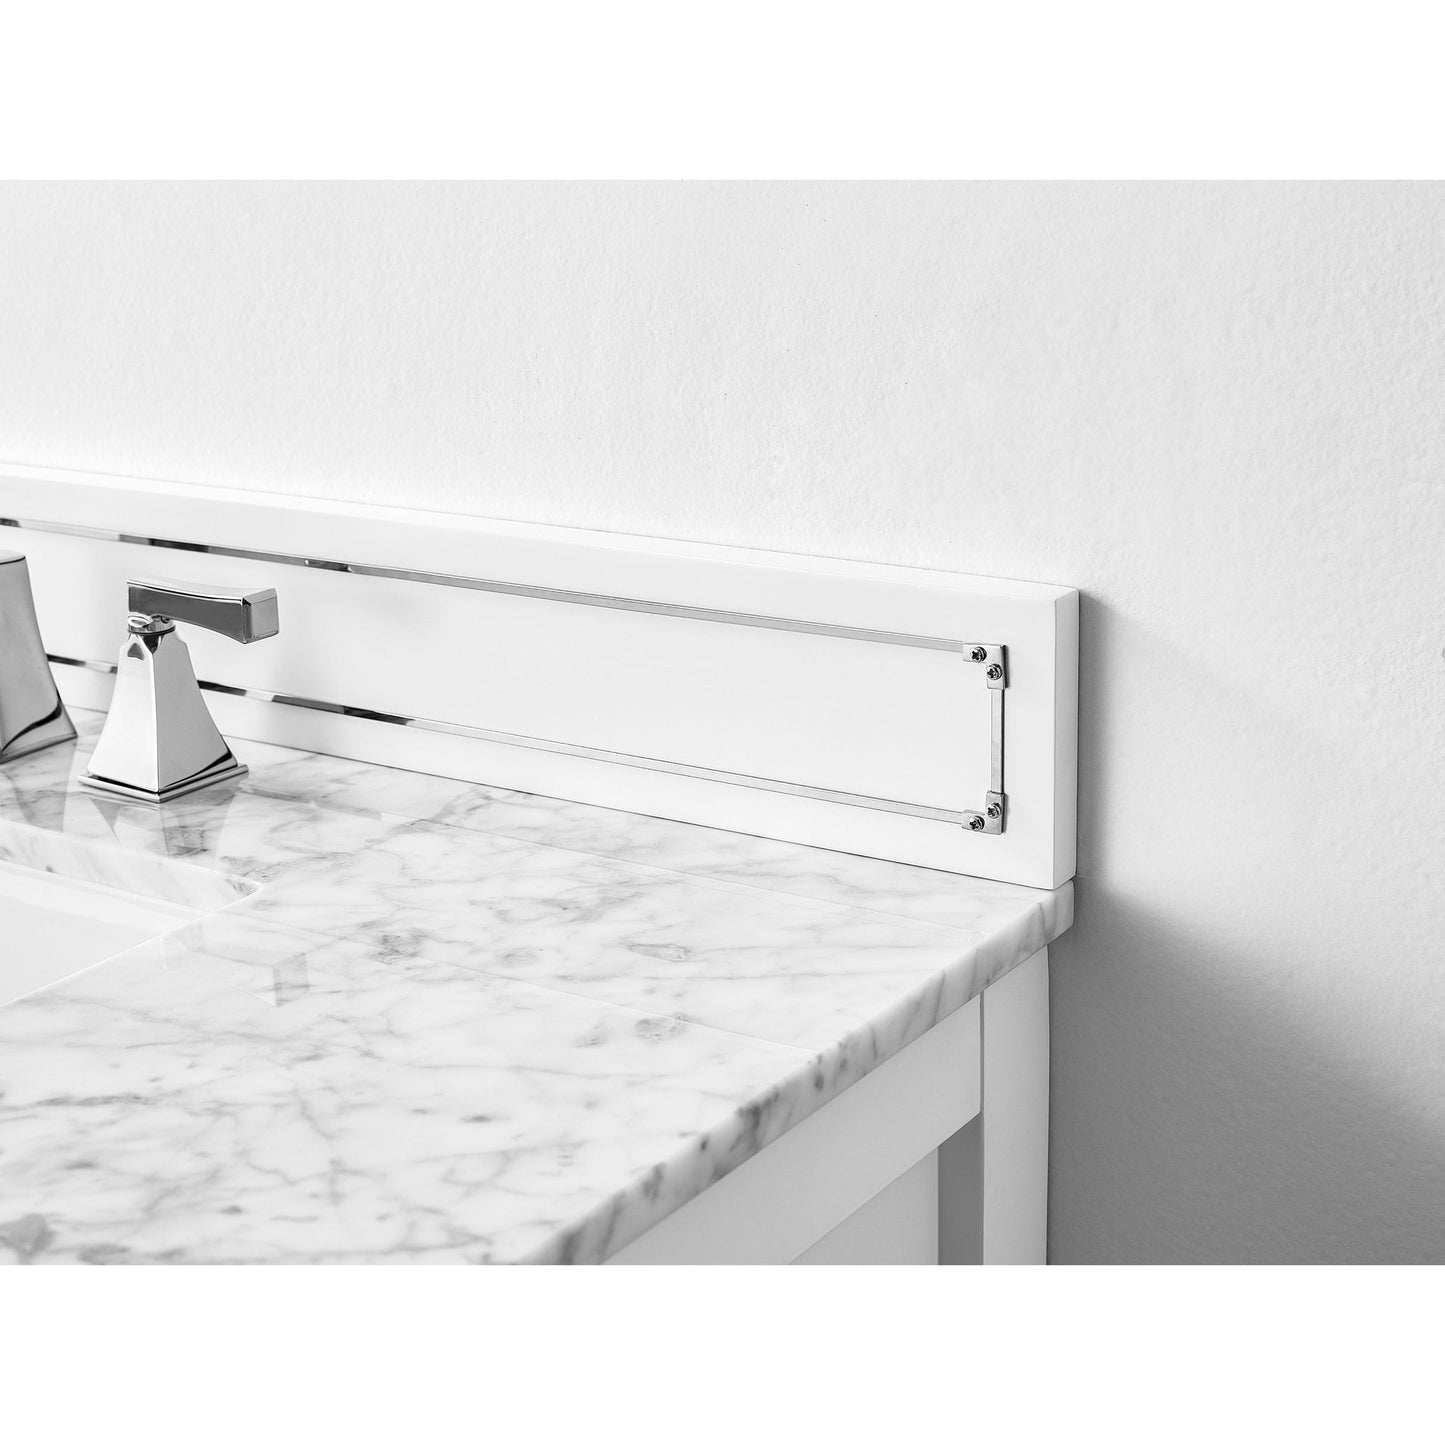 Ancerre Designs Aspen 36" White 2-Door 3-Drawer Bathroom Vanity With White Marble Vanity Top, Single Undermount Ceramic Sink, 4" Solid Wood Backsplash and Chrome Hardware